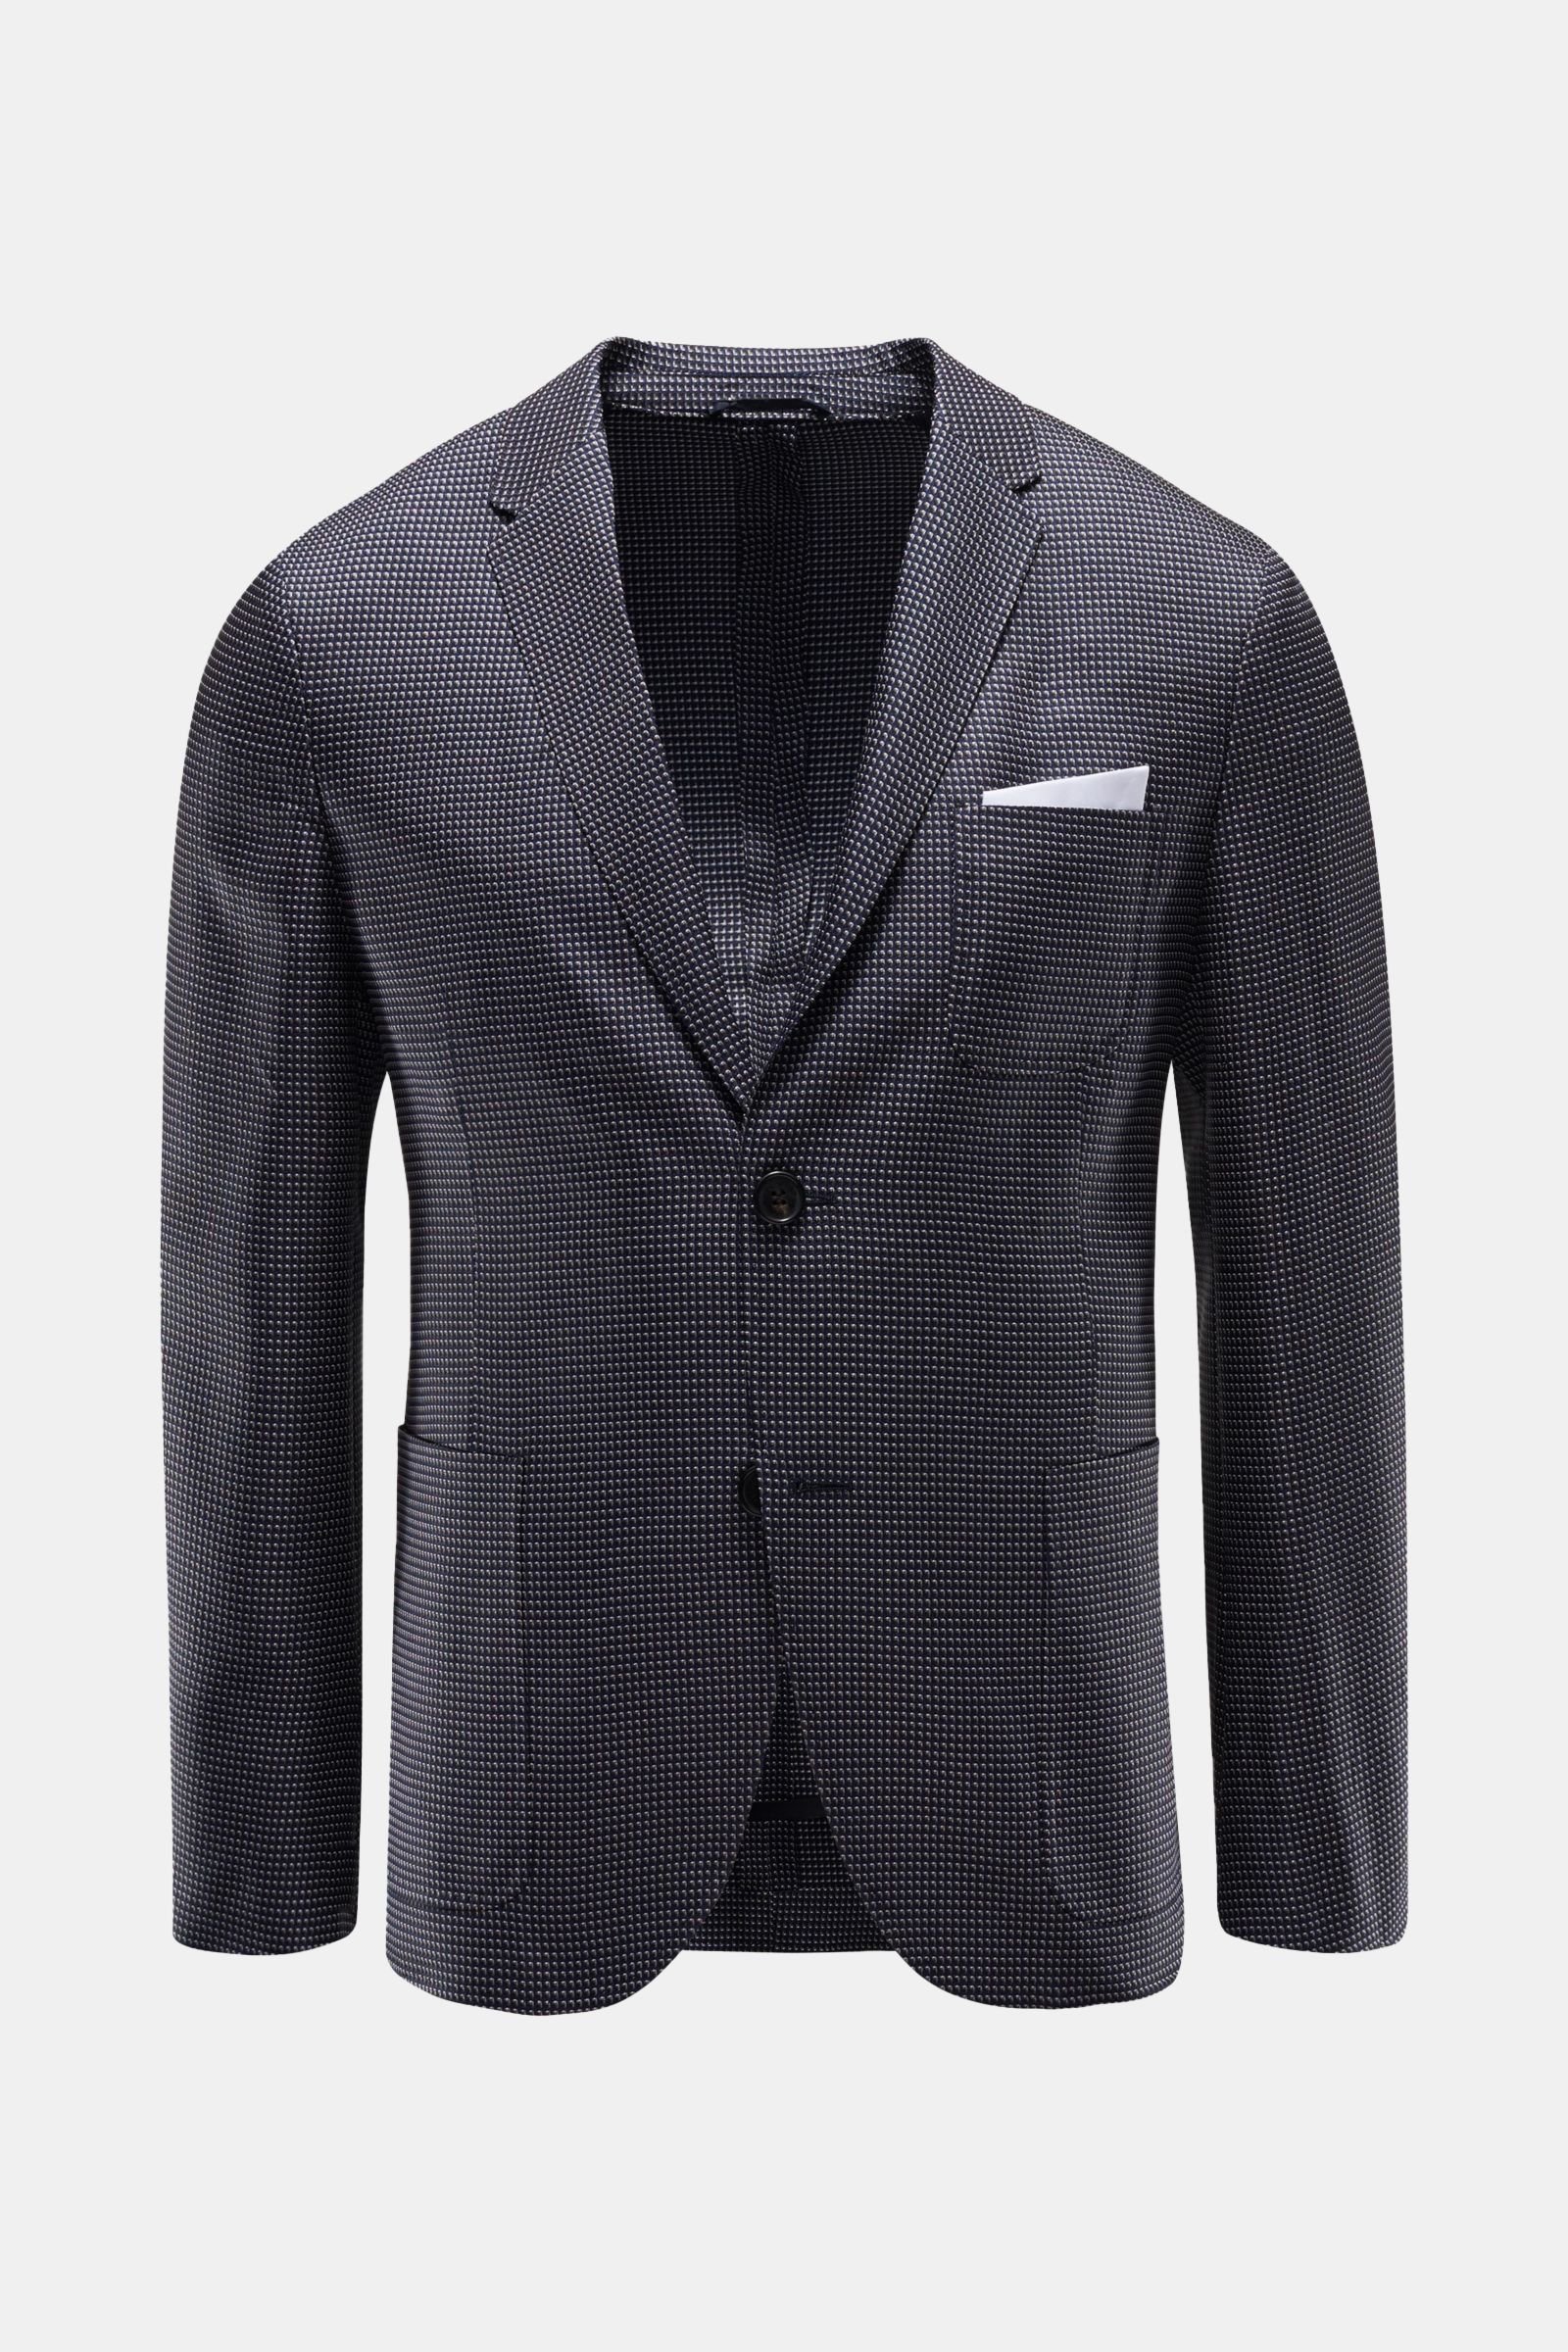 Smart-casual jacket blue/grey patterned